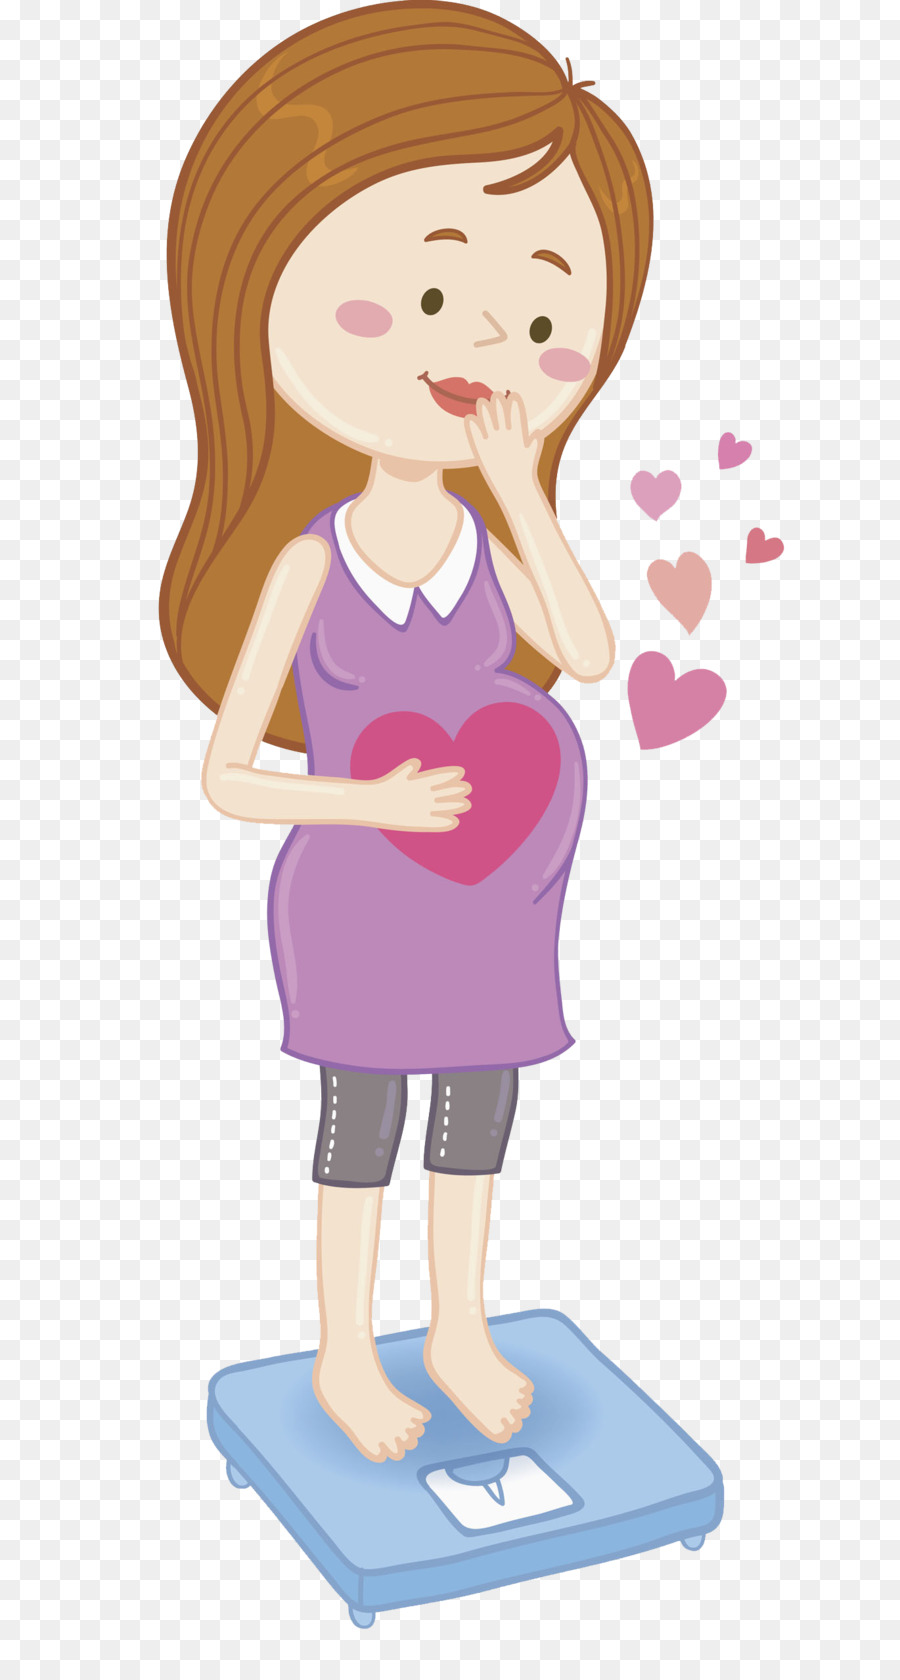 Pregnancy Drawing Woman Dessin animxe9 Fetus - Love pregnant woman png download - 1370*2550 - Free Transparent  png Download.